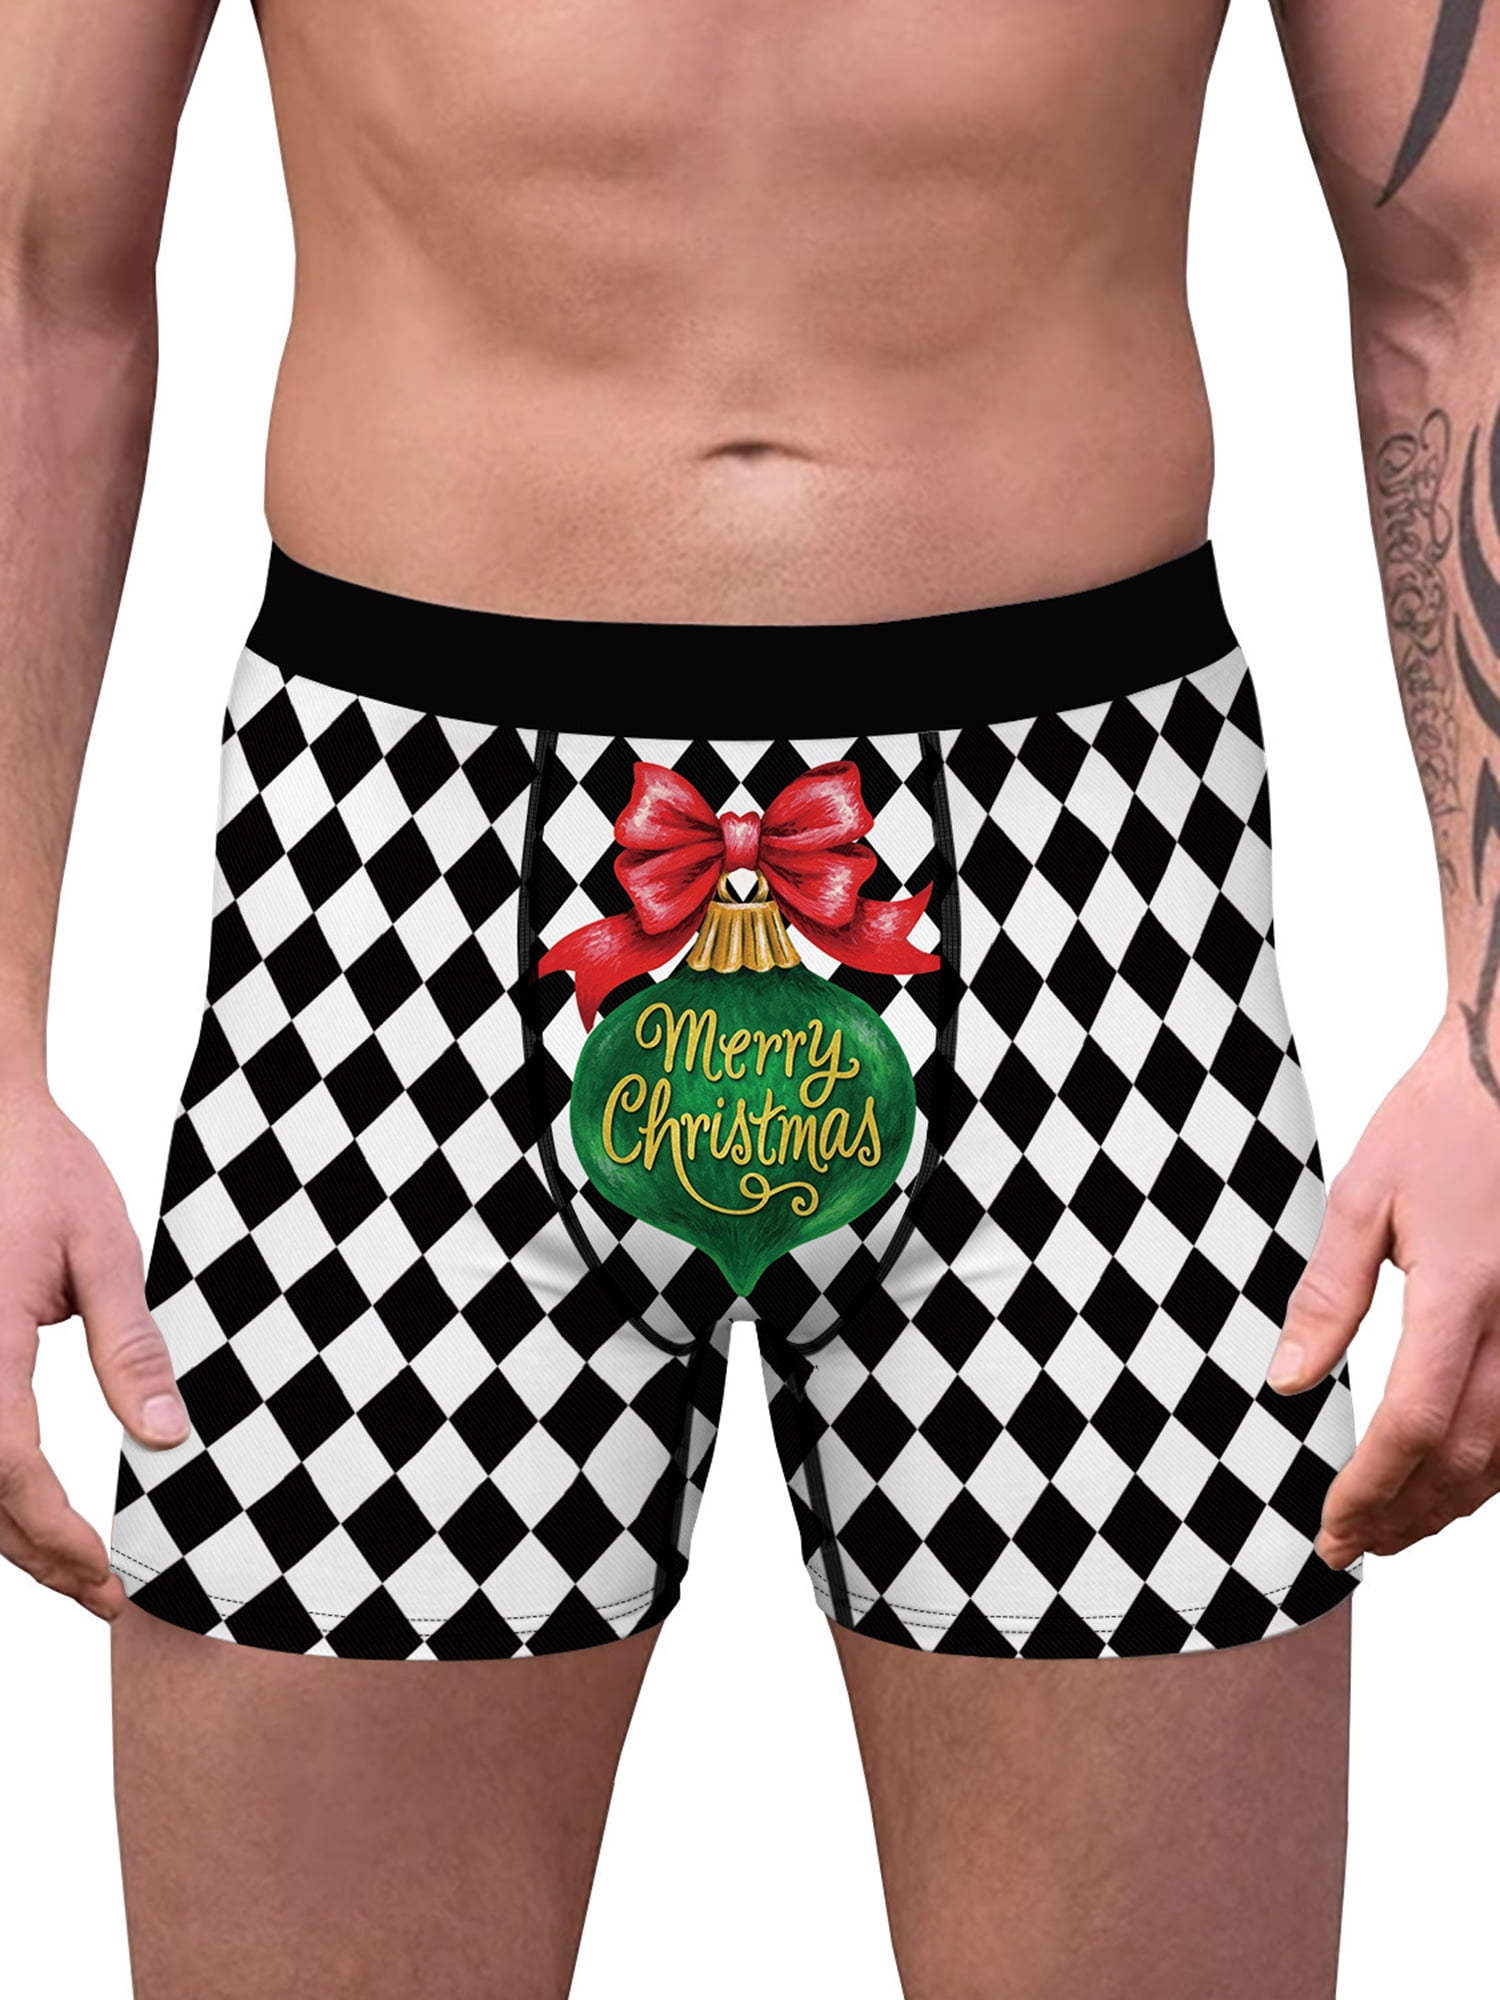 Men's Boxer Briefs Sexy Christmas Underwear Santa Claus Print